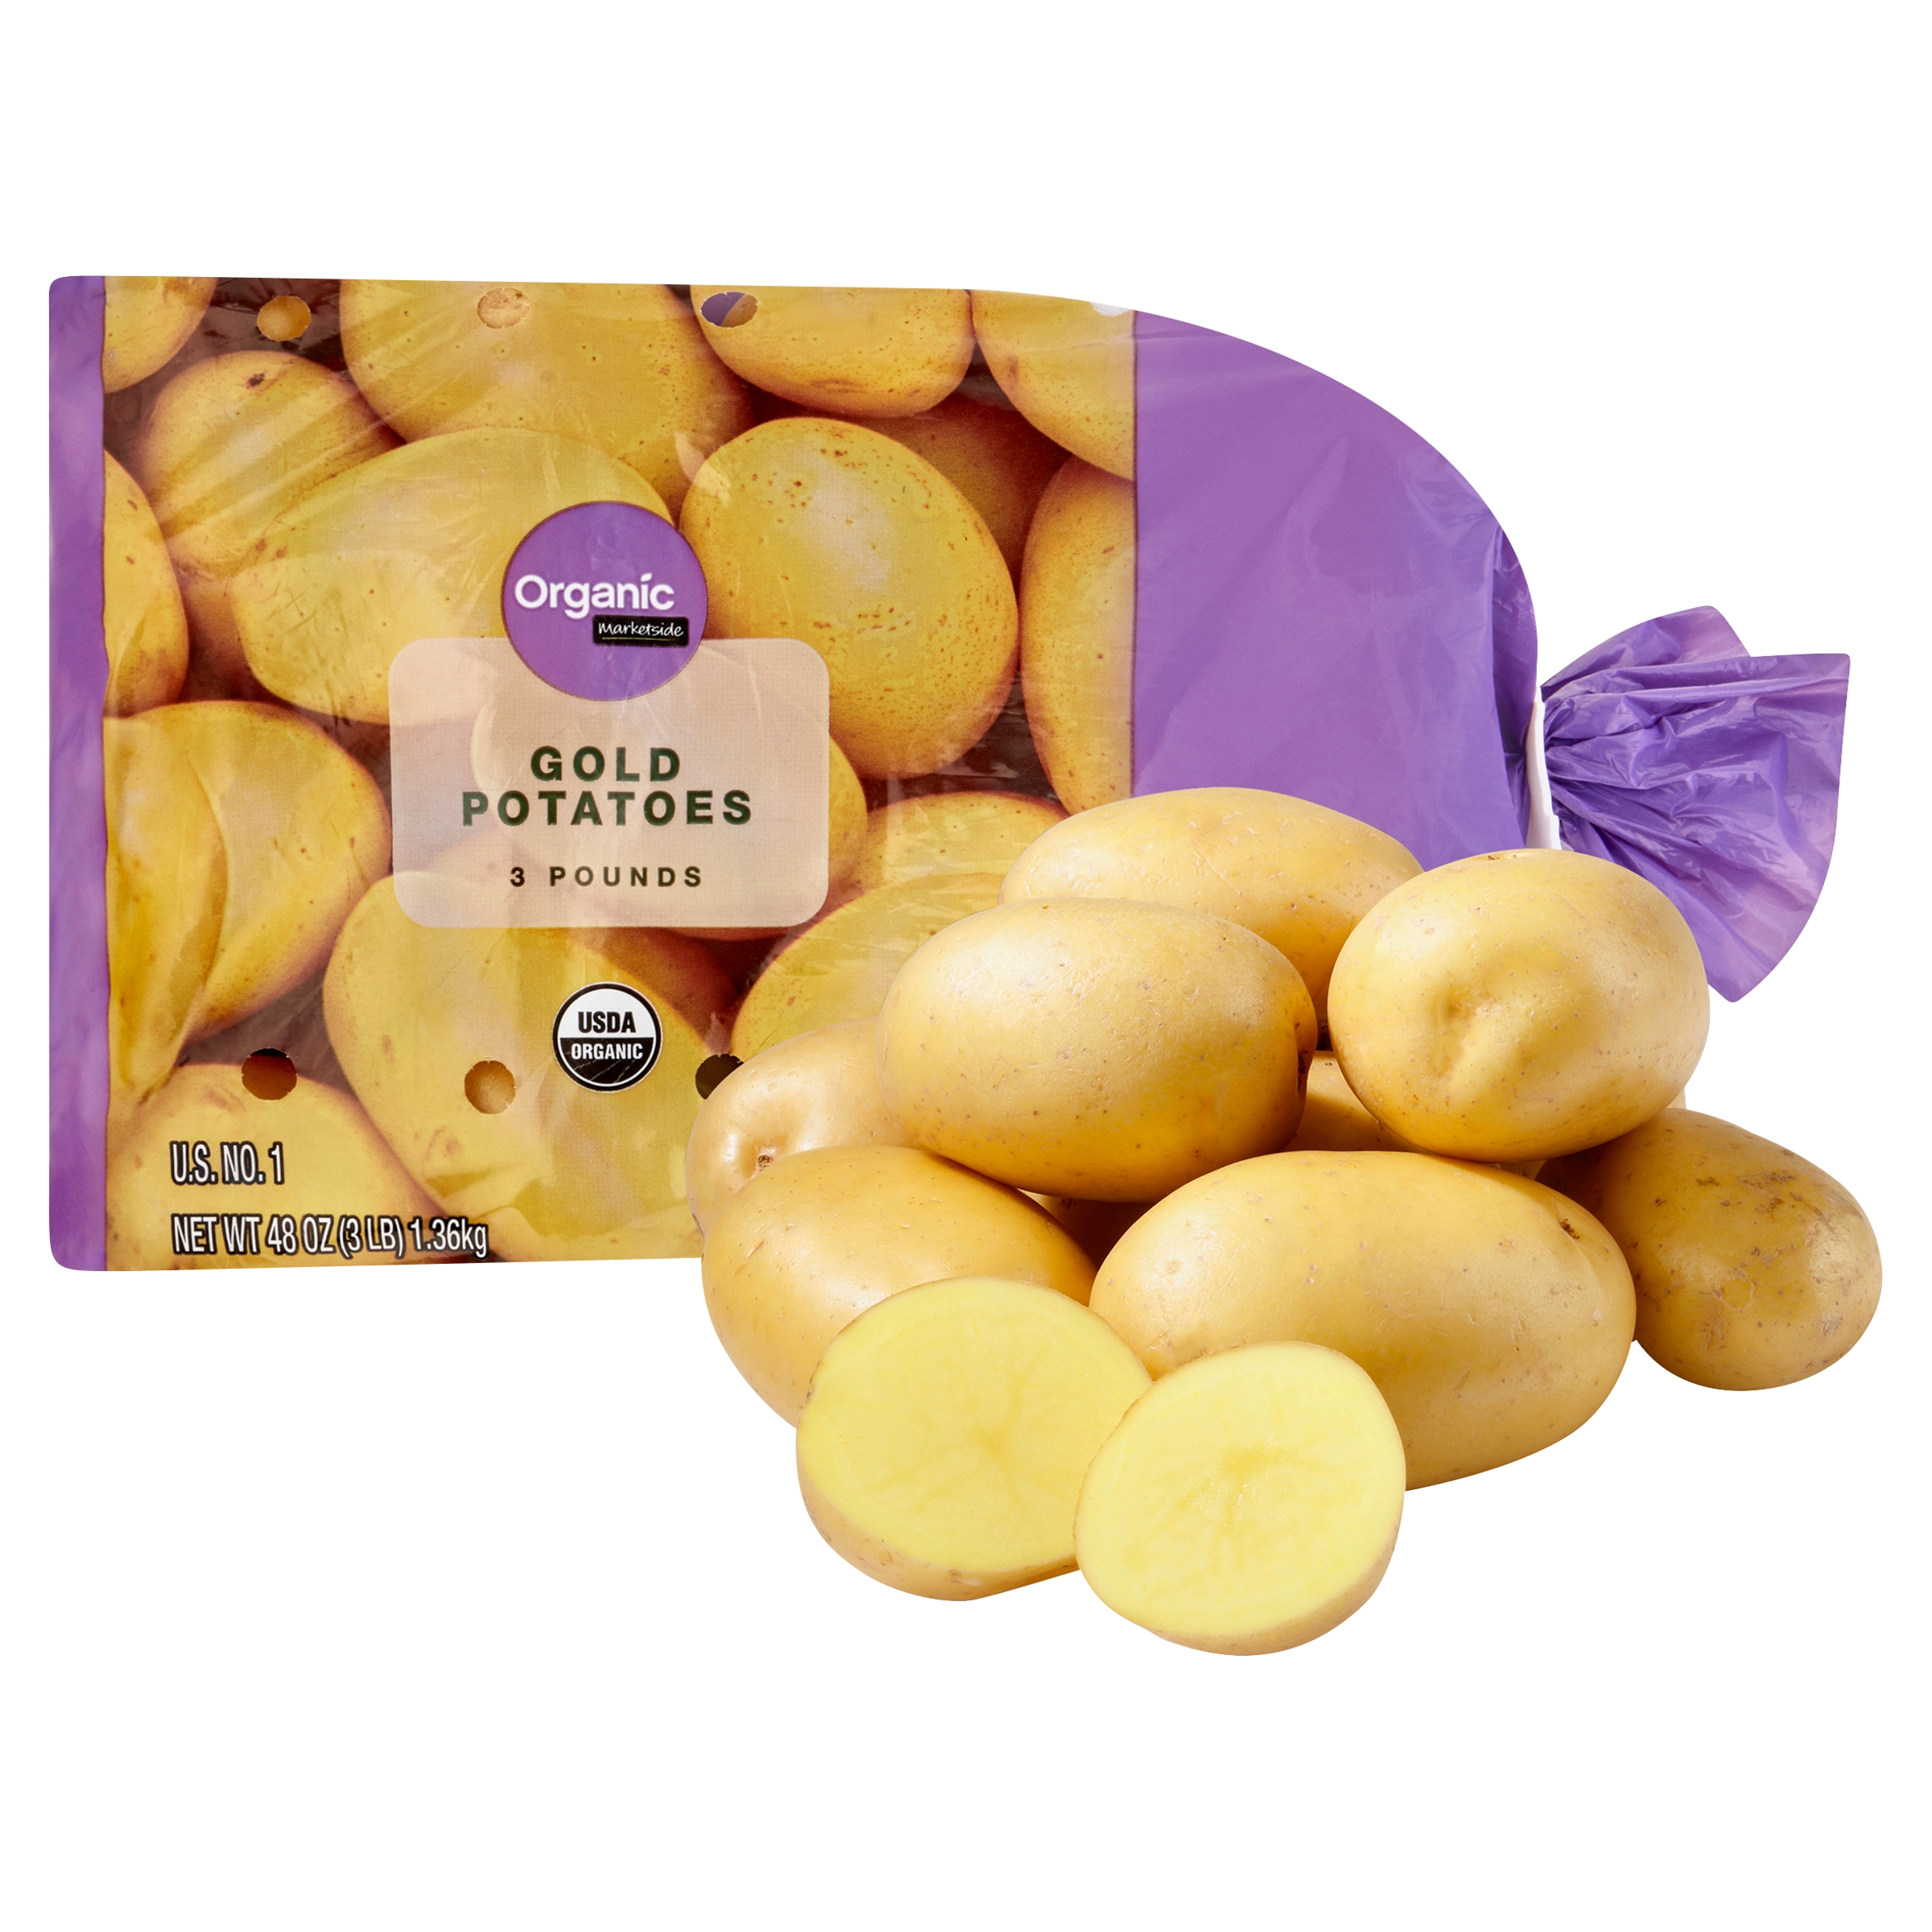 Marketside Fresh Organic Gold Potatoes, 3 lb Bag - image 1 of 5